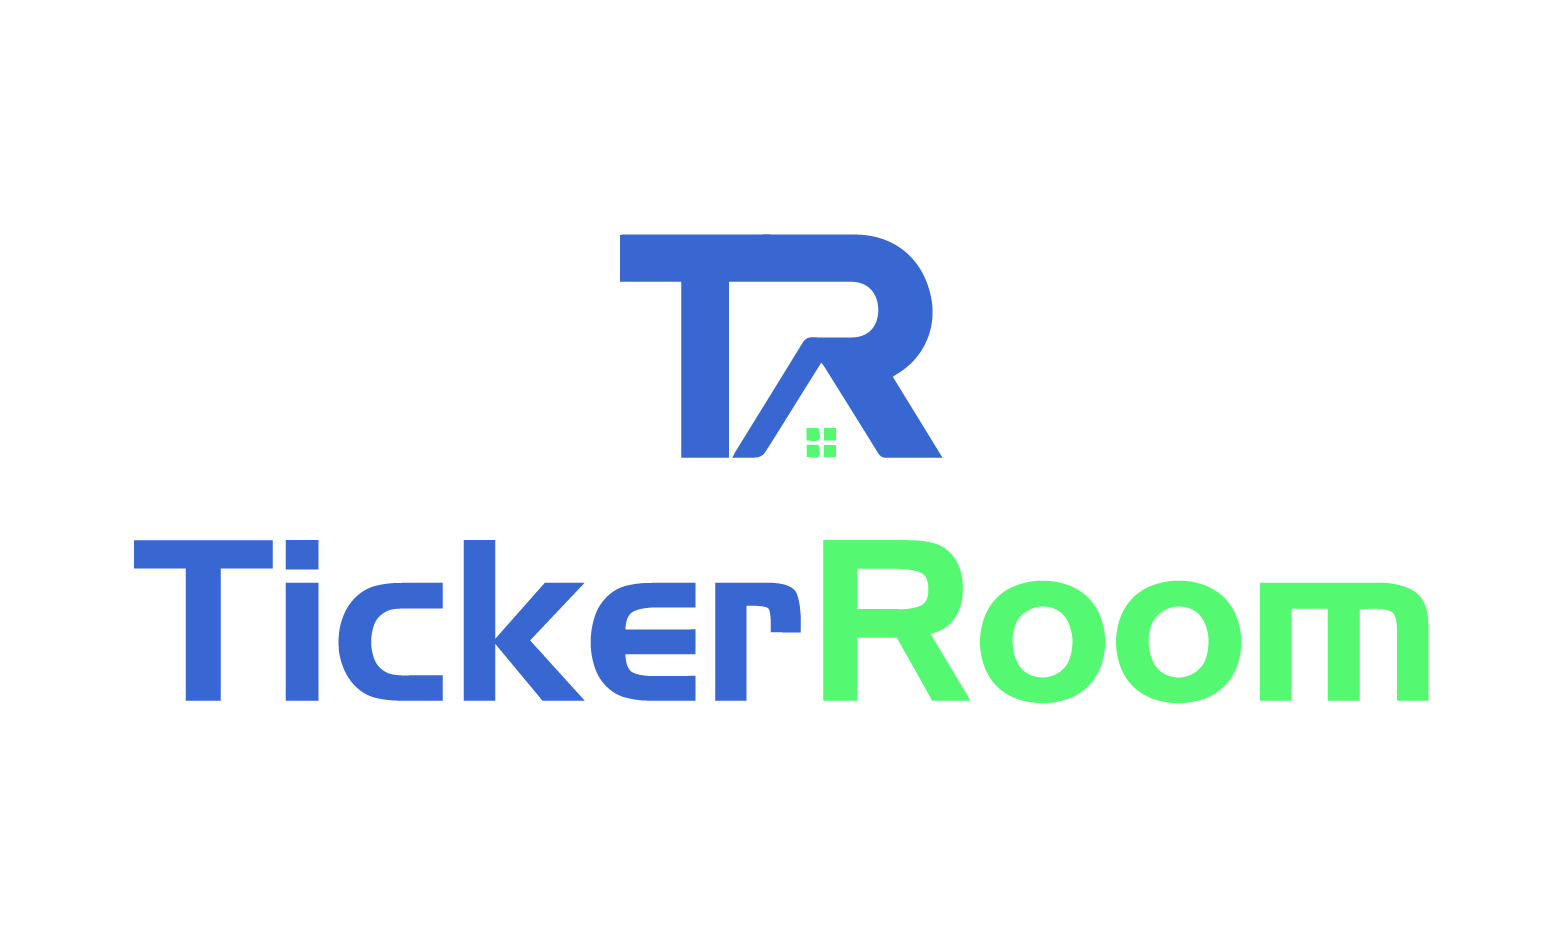 TickerRoom.com - Creative brandable domain for sale